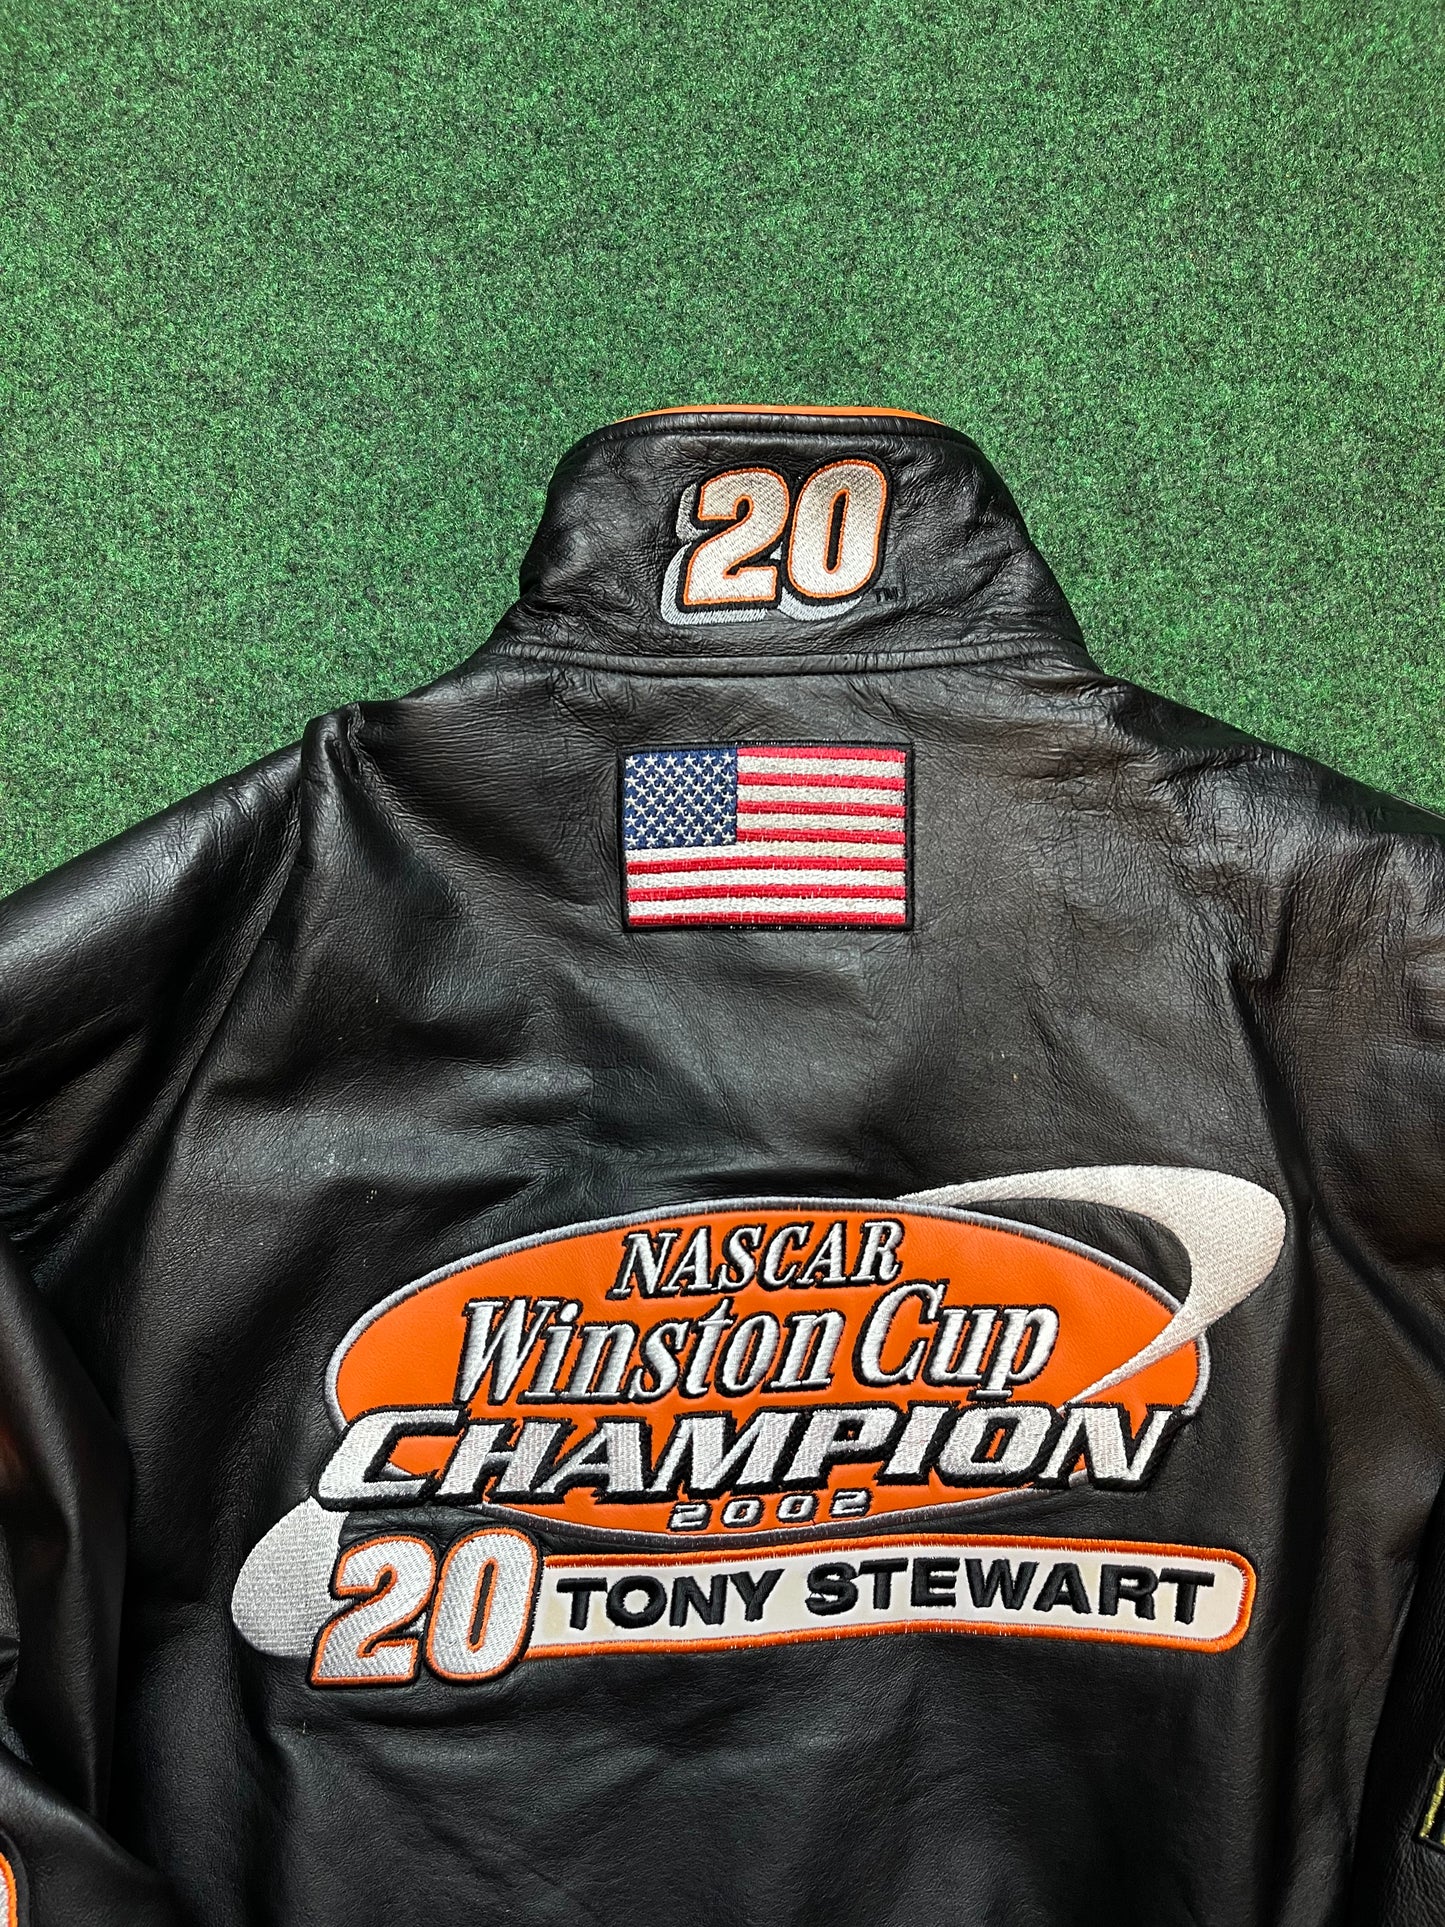 2002 Tony Stewart Home Depot Racing Vintage NASCAR Winston Cup Champion Jeff Hamilton Leather Jacket (Medium)